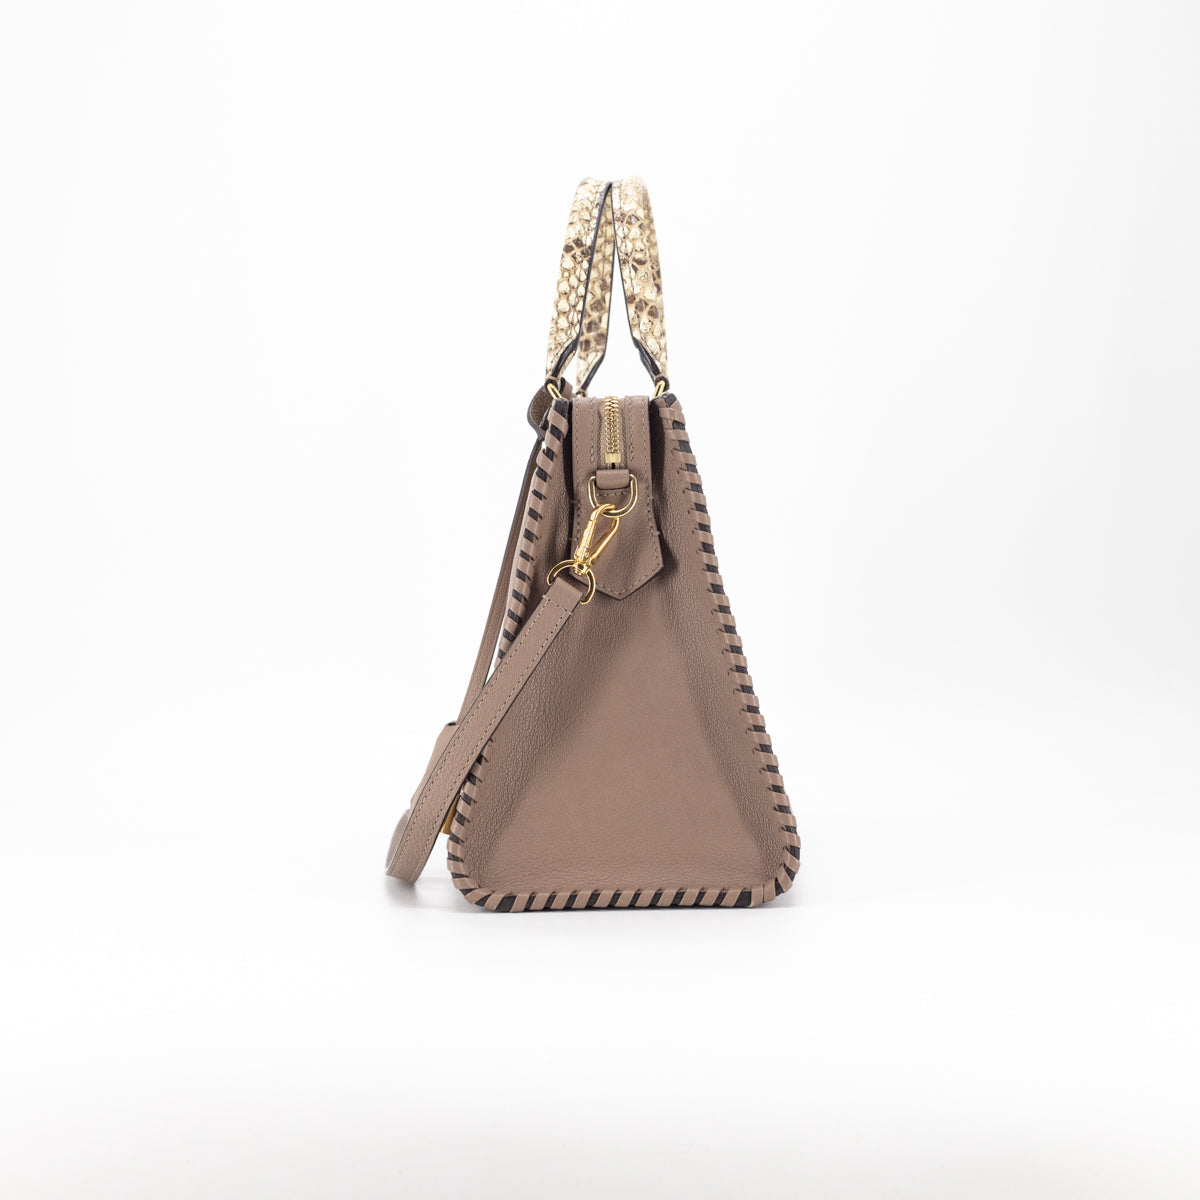 Louis Vuitton Very Zipped Python Bag Light Brown - THE PURSE AFFAIR